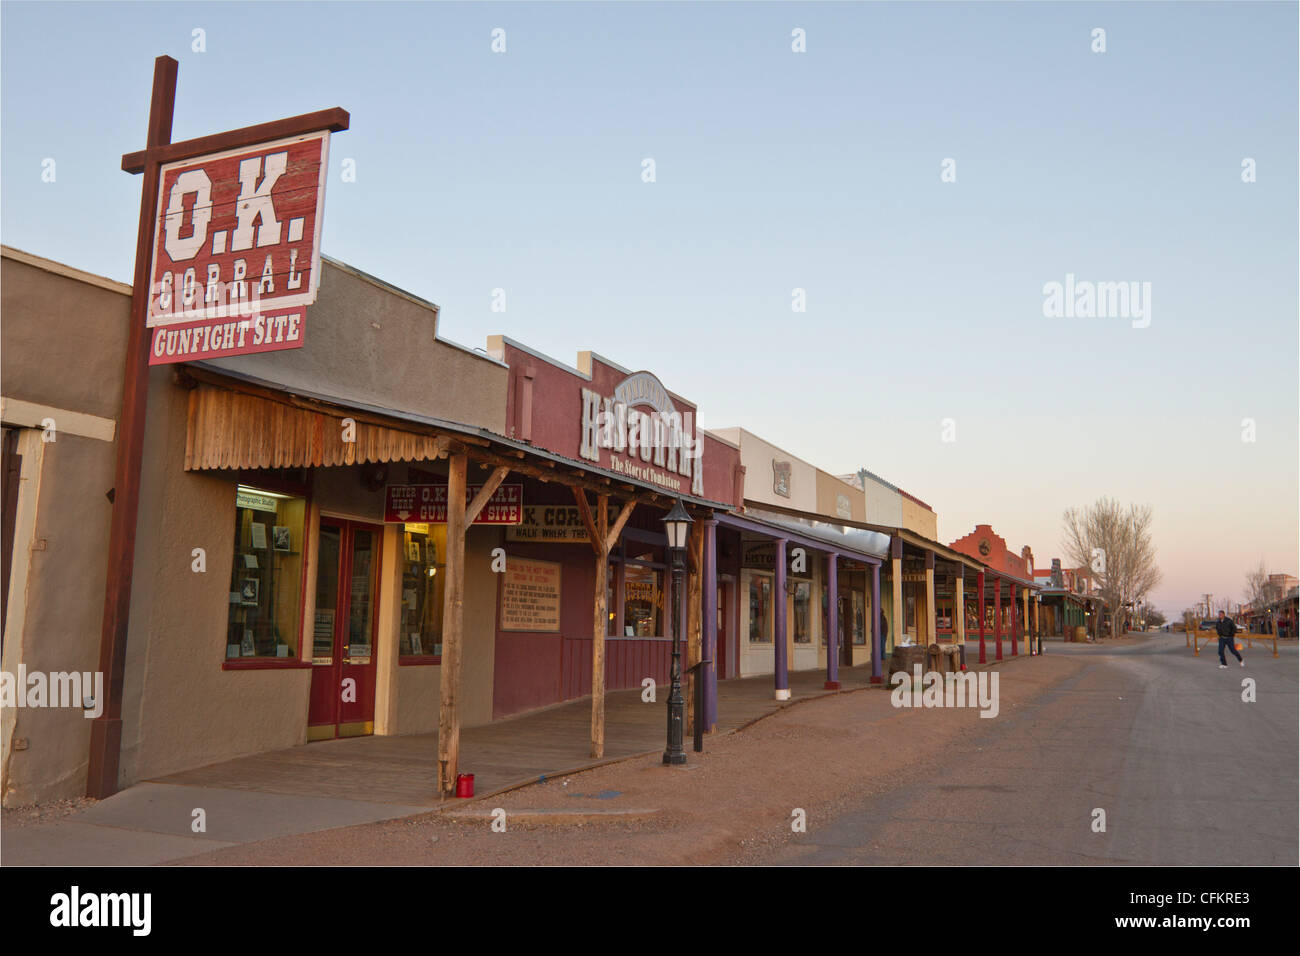 Historic town of Tombstone, Arizona. Stock Photo